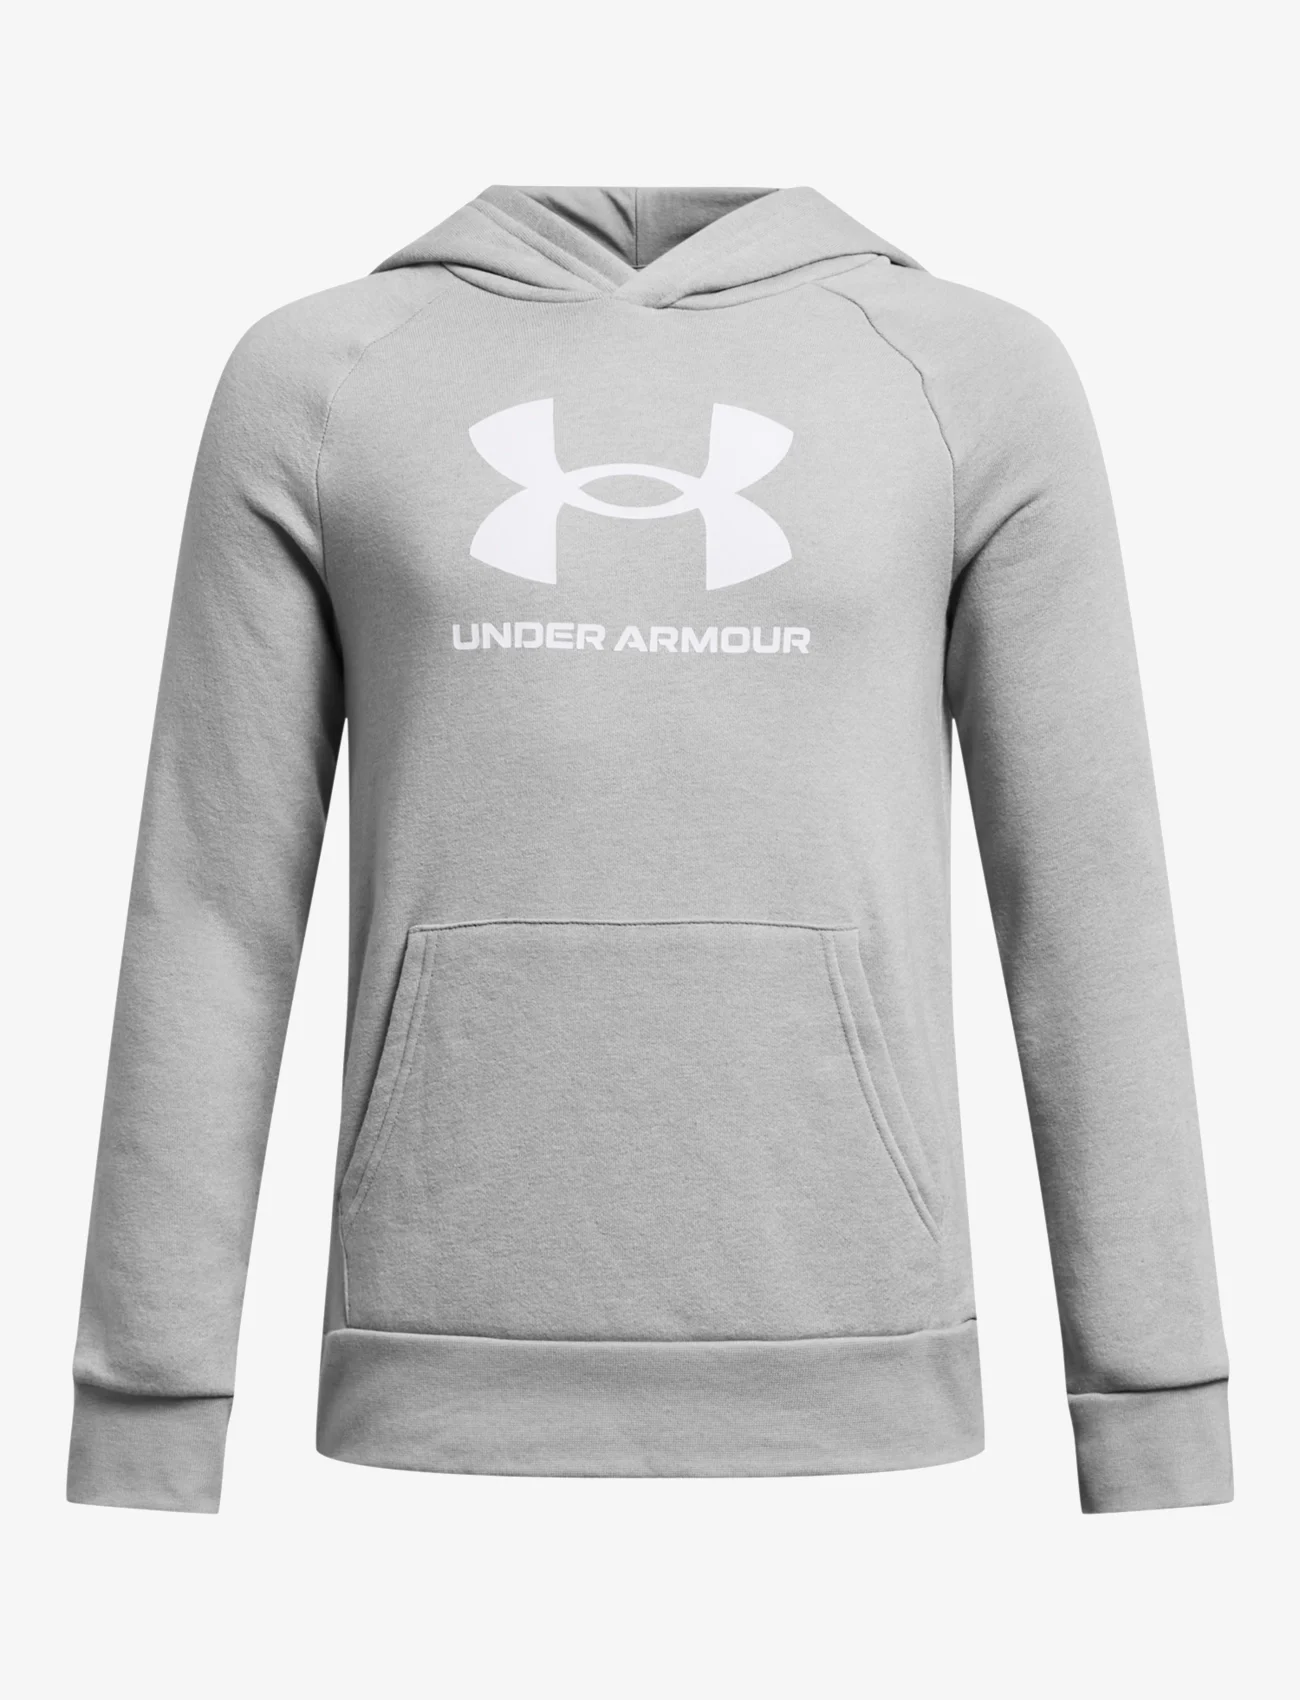 Under Armour - UA Rival Fleece BL Hoodie - hupparit - gray - 0